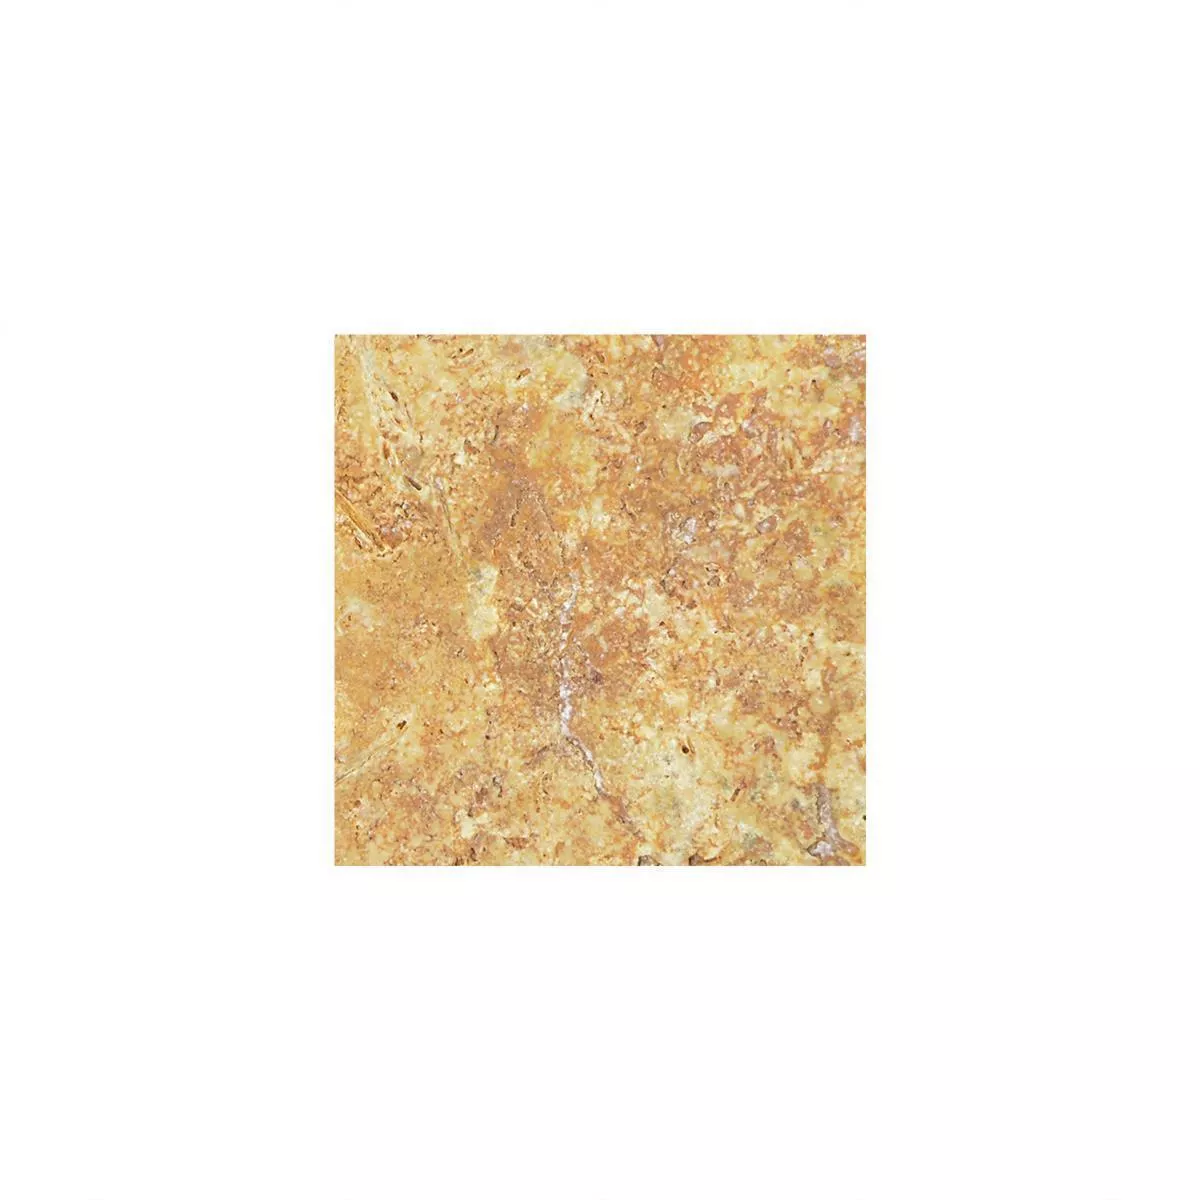 Sample Natural Stone Tiles Travertine Castello Gold 10x10cm